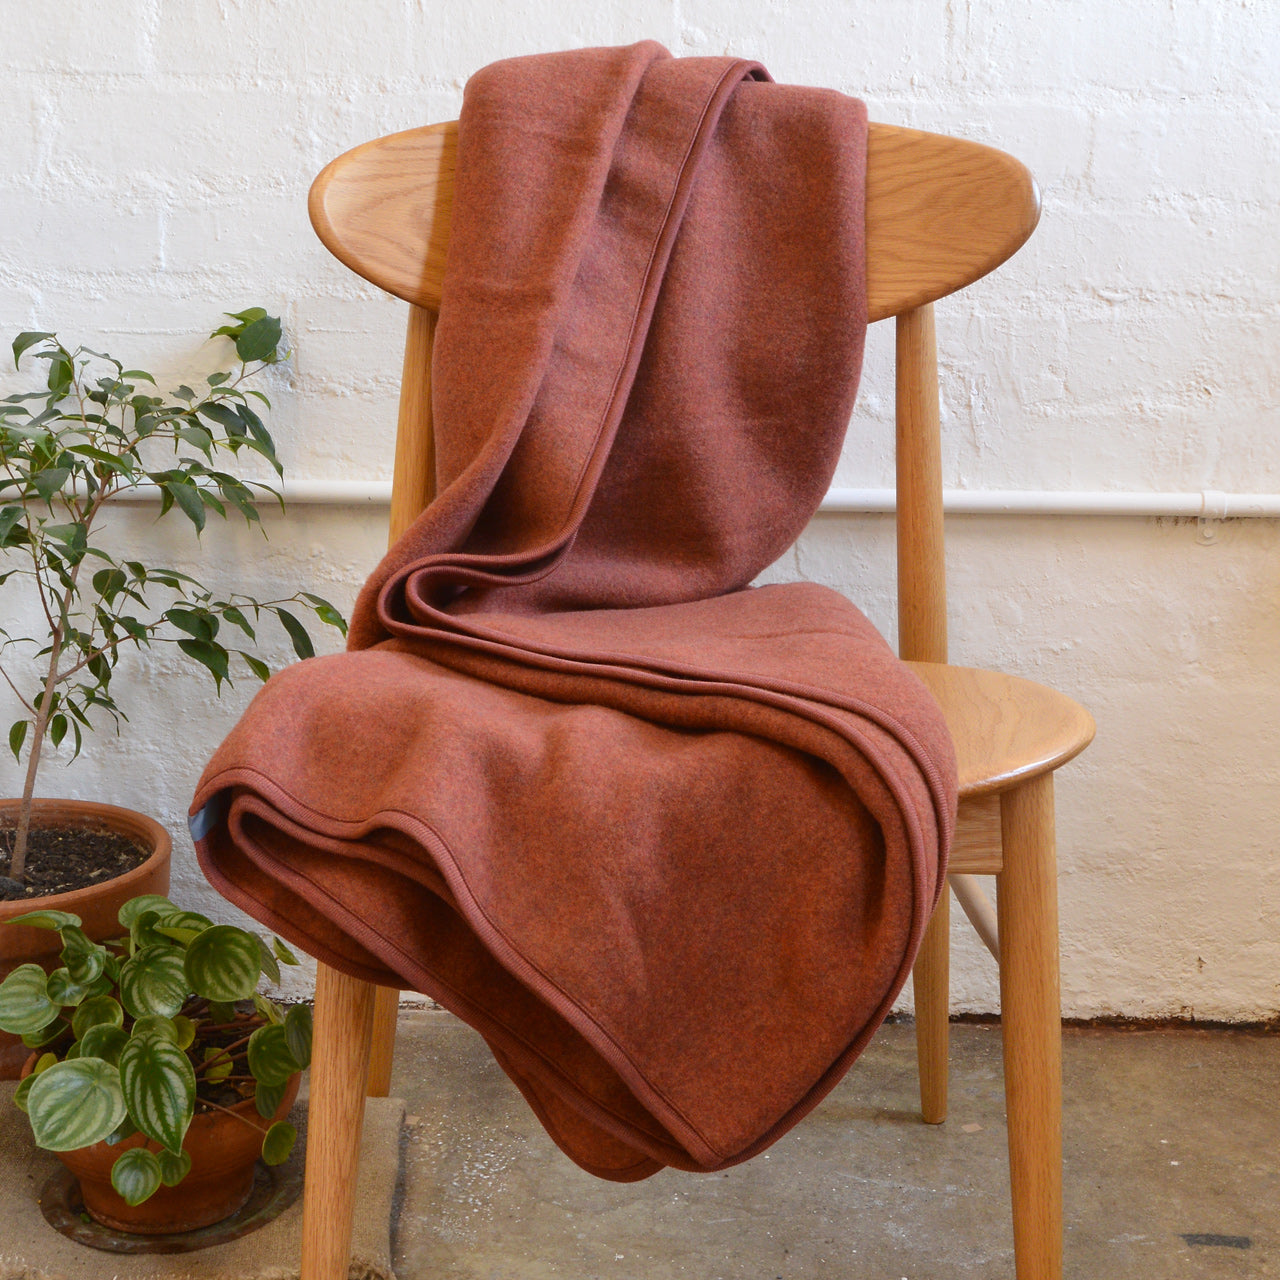 Organic Merino Wool Fleece Blanket - Large (180x160cm)